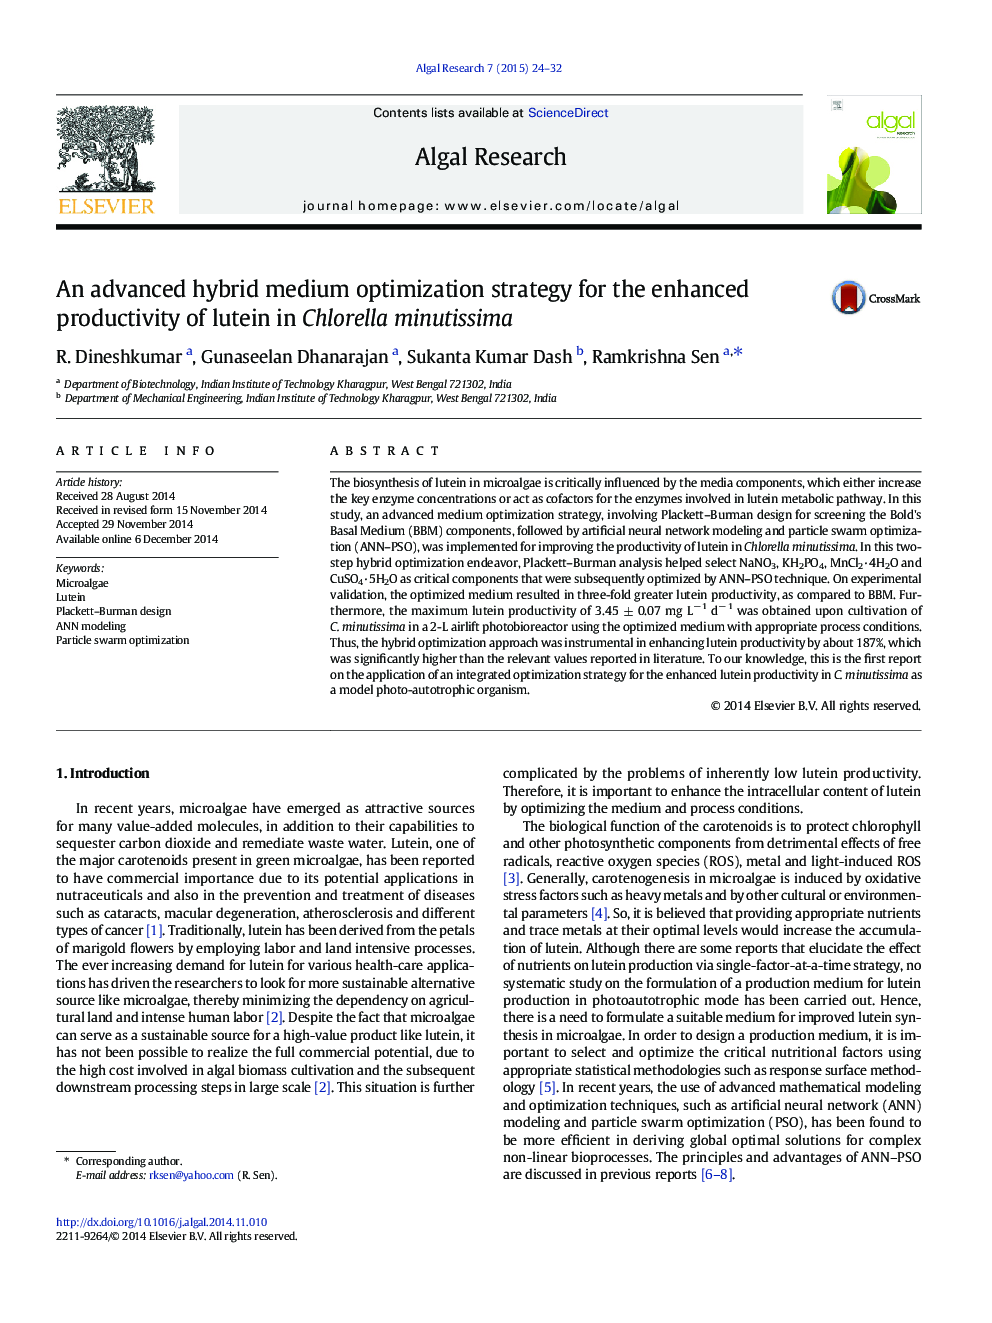 An advanced hybrid medium optimization strategy for the enhanced productivity of lutein in Chlorella minutissima